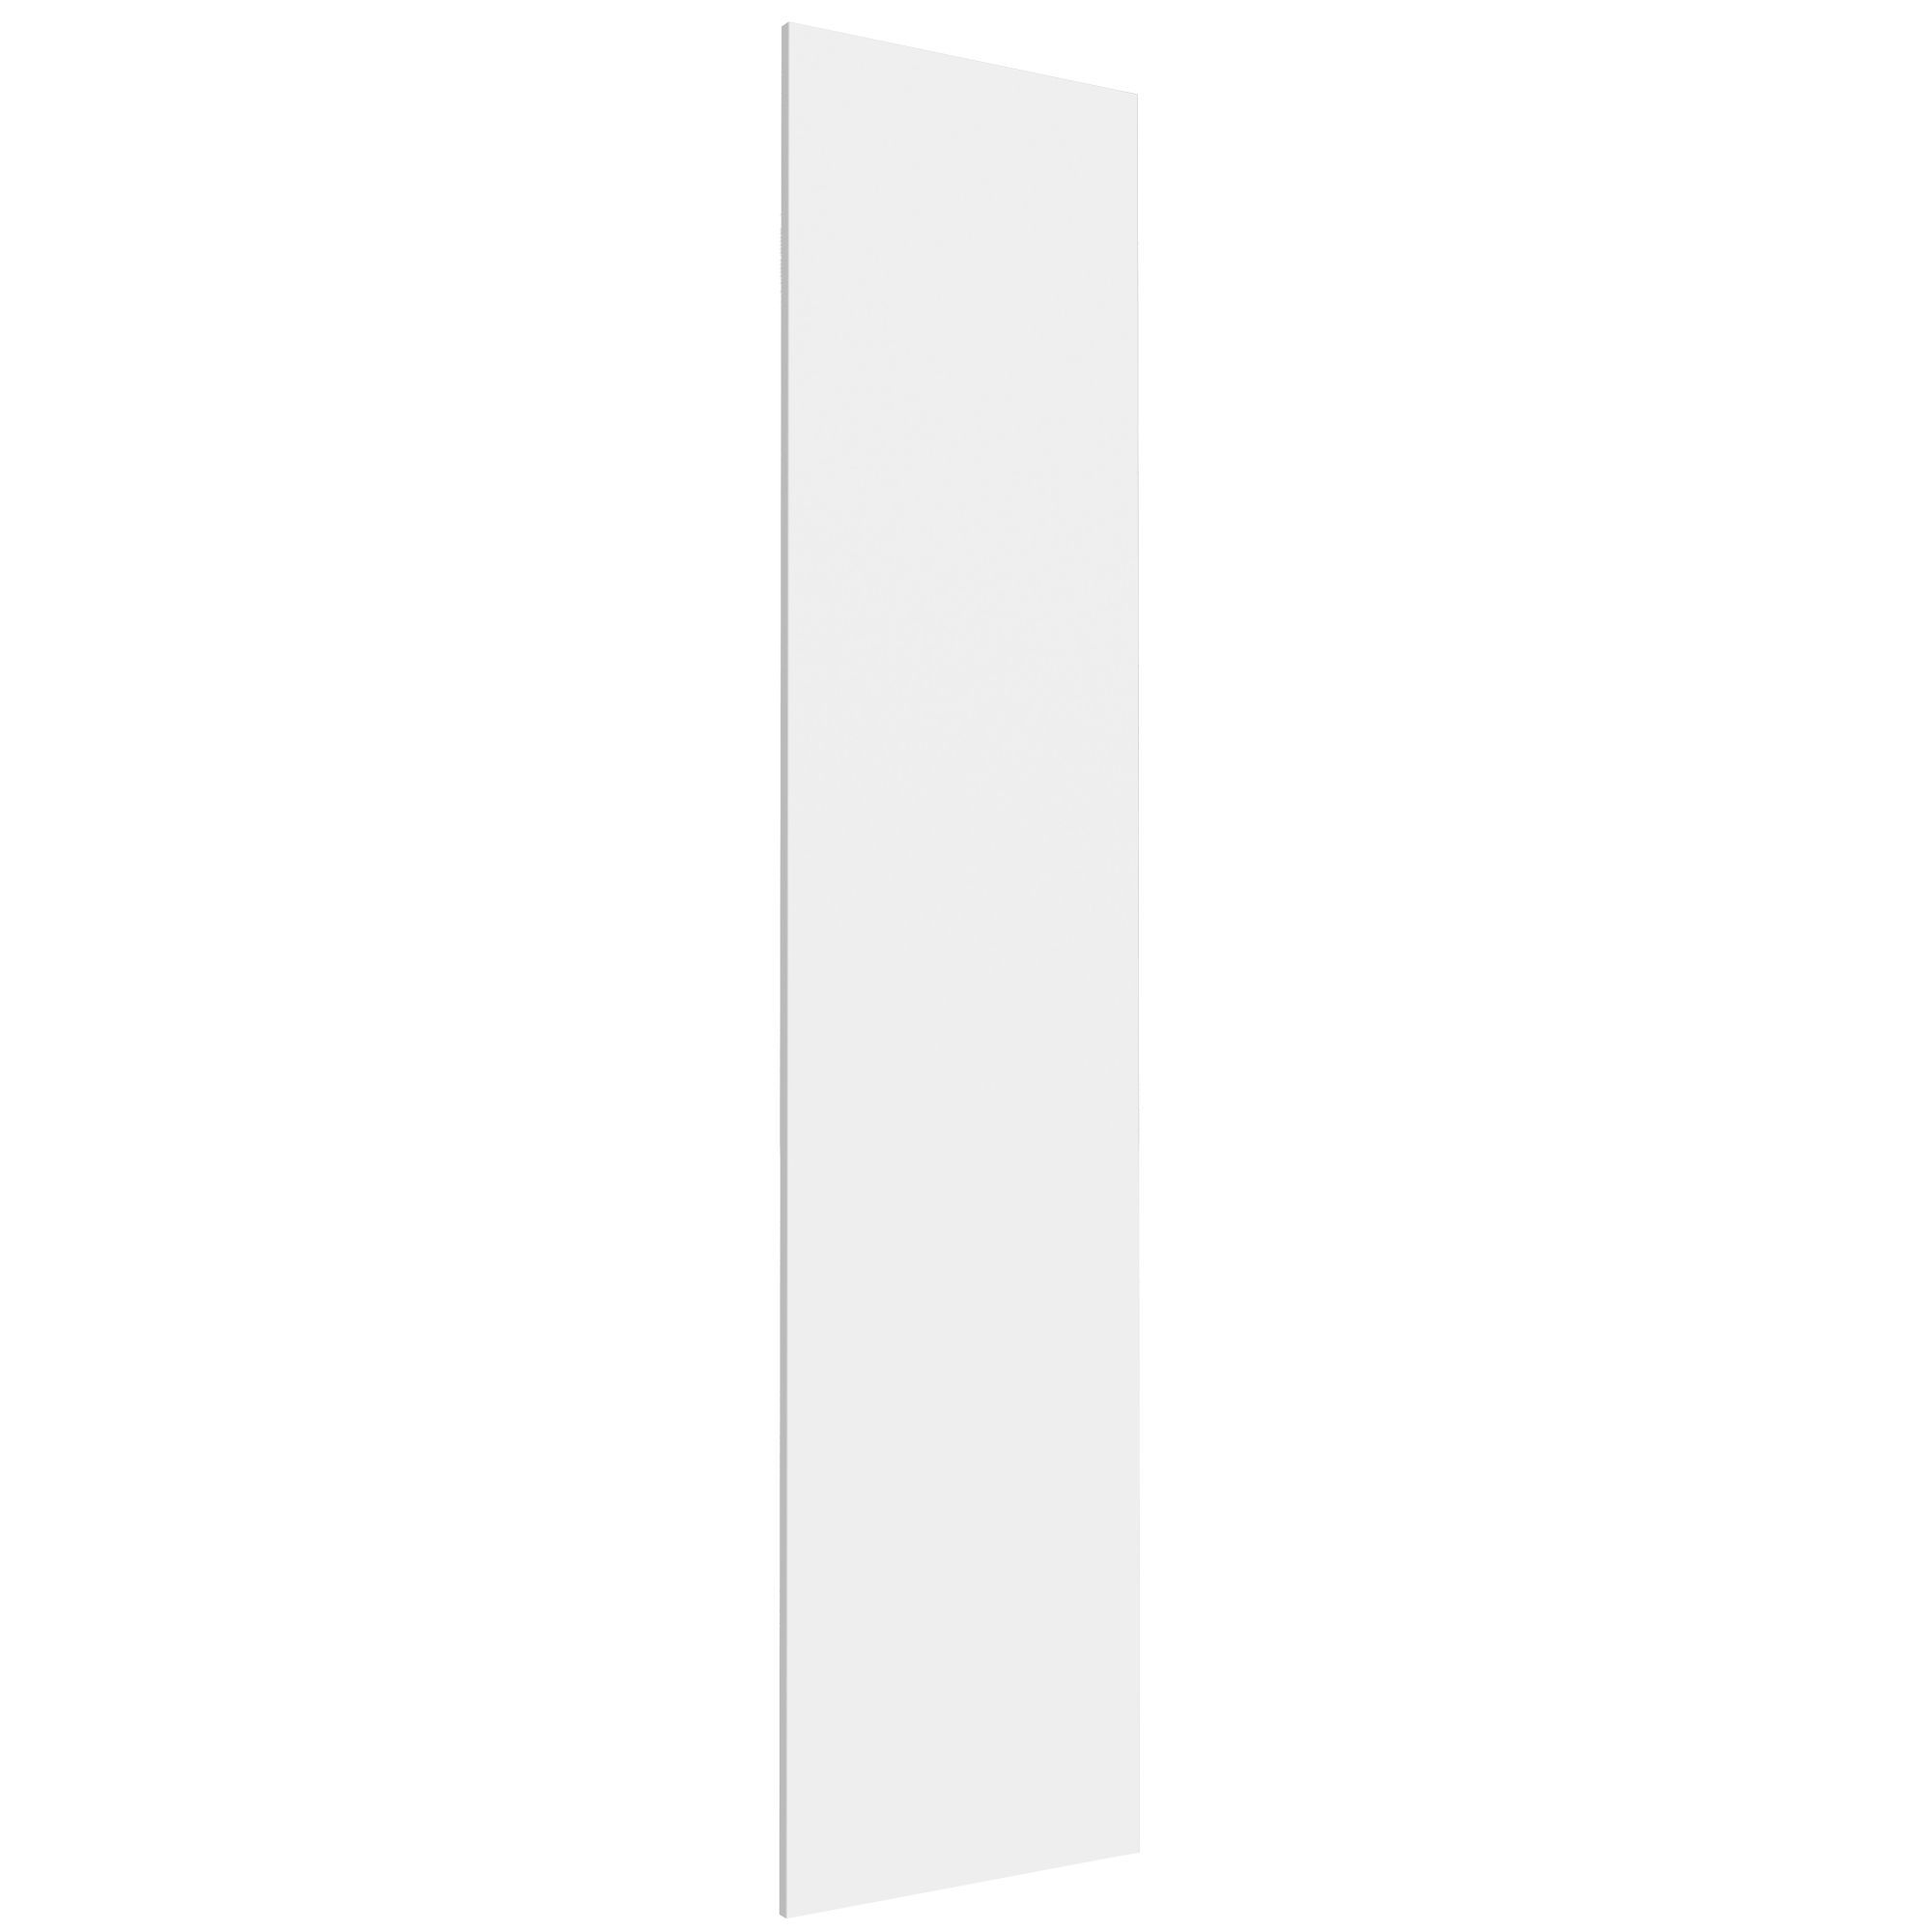 Form Darwin Modular Matt white Tall Wardrobe door (H)2288mm (W)497mm